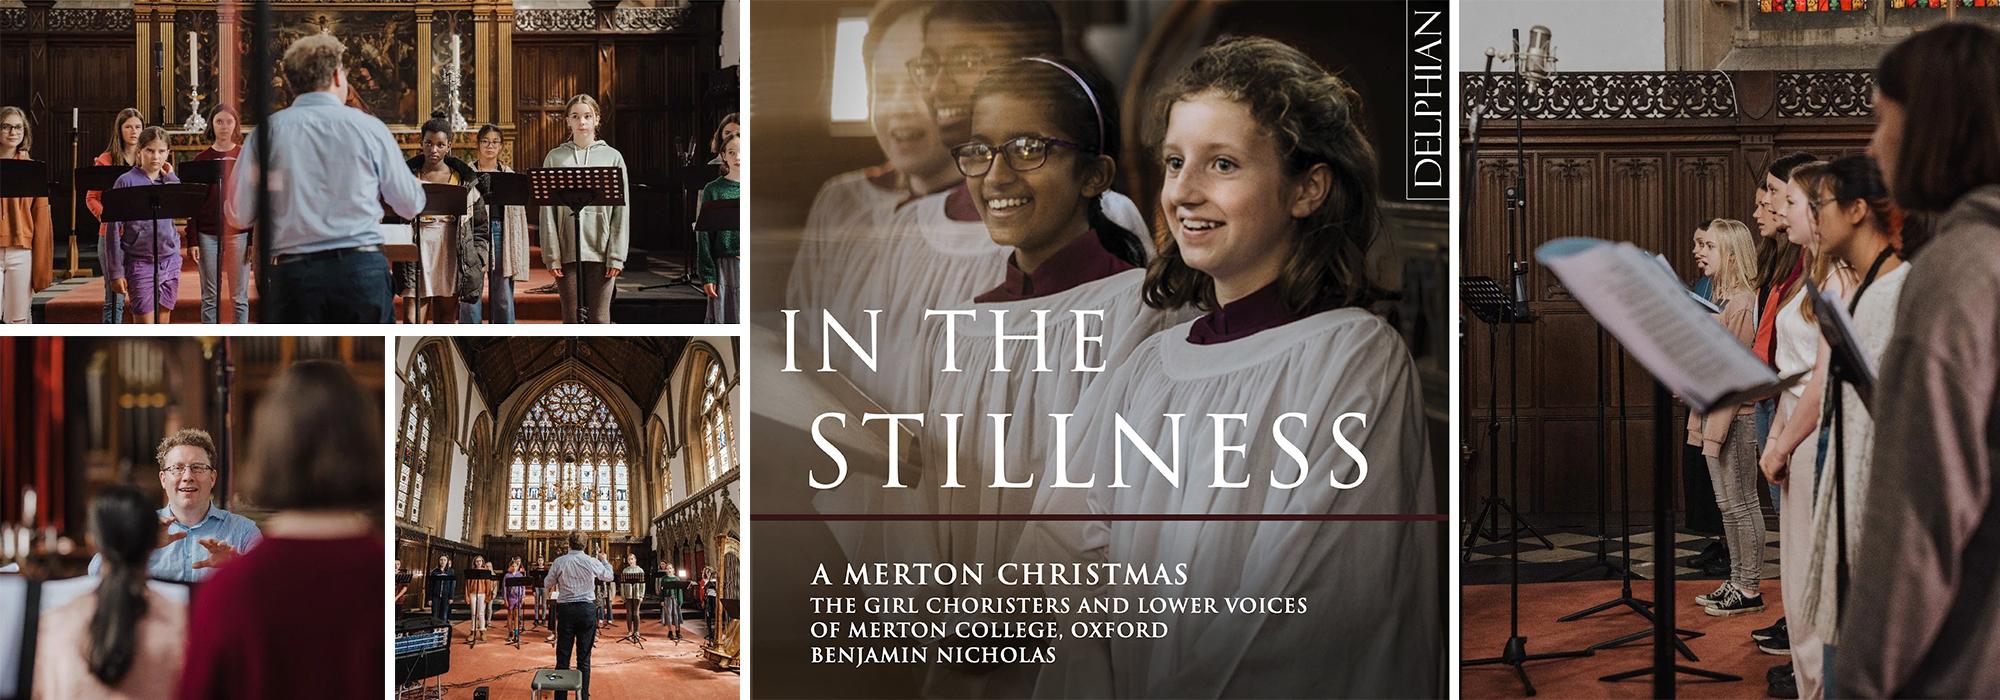 In the stillness: A Merton Christmas